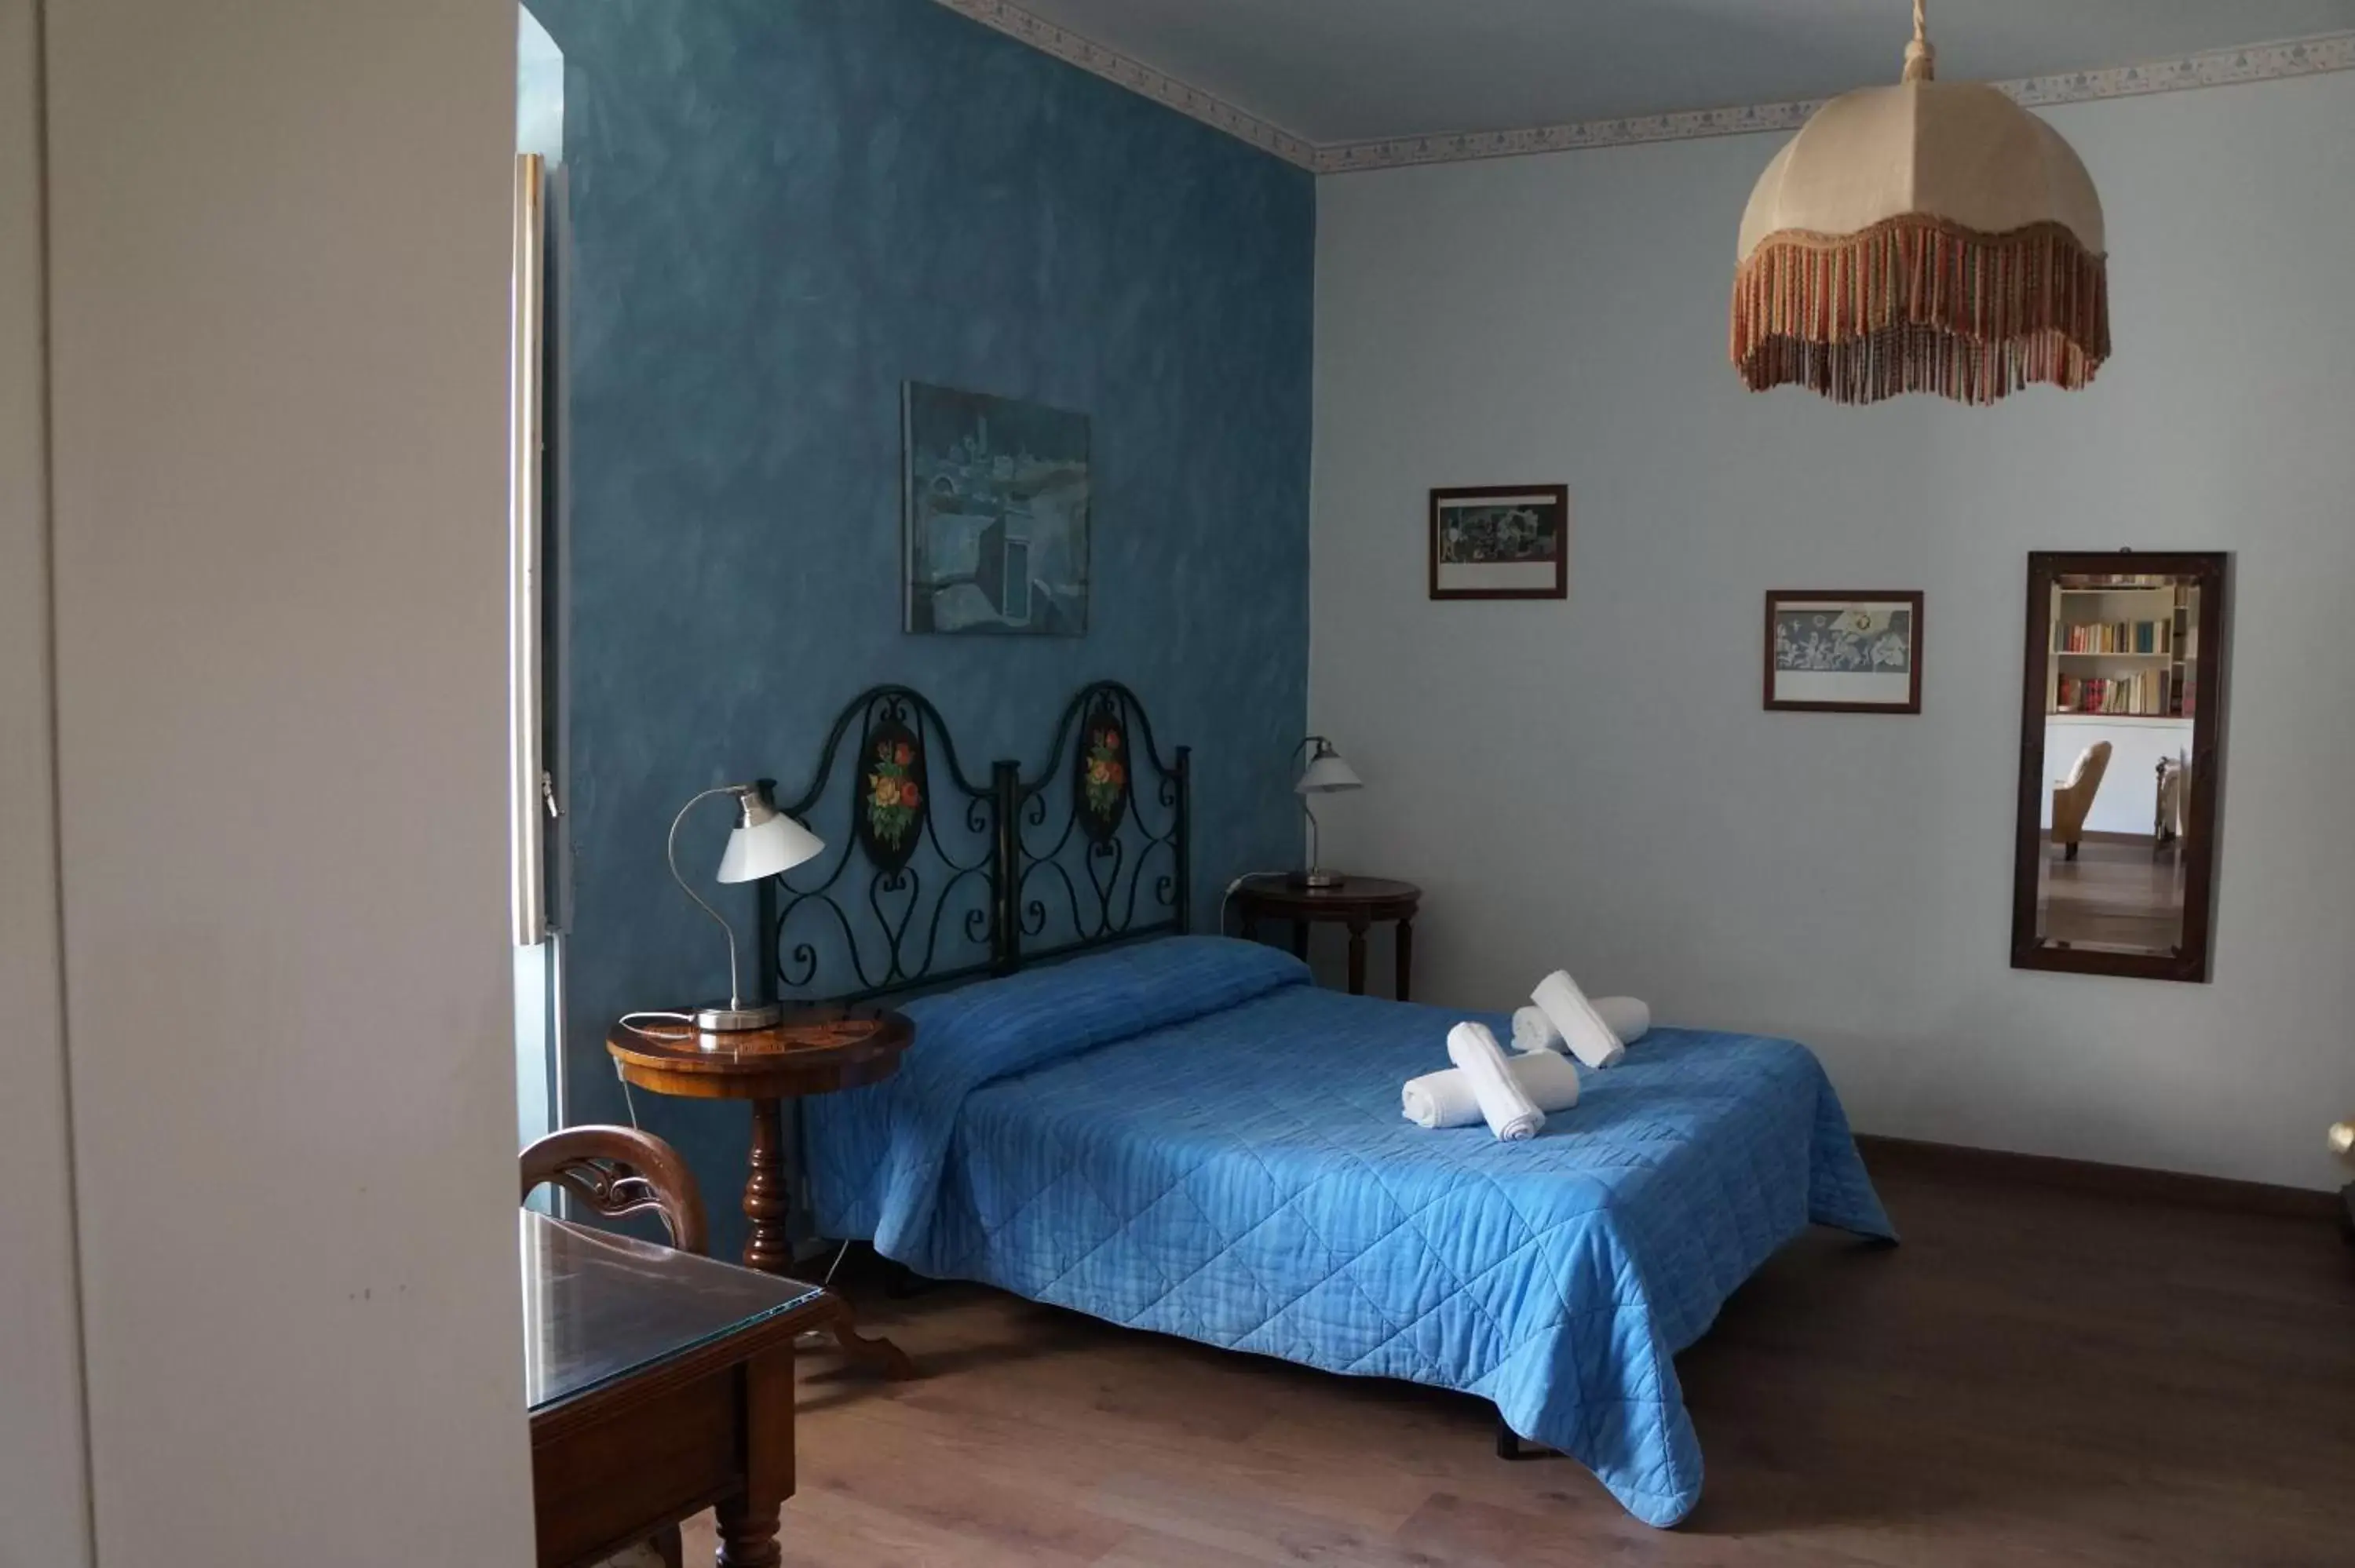 Bed, Room Photo in Risveglio Ibleo